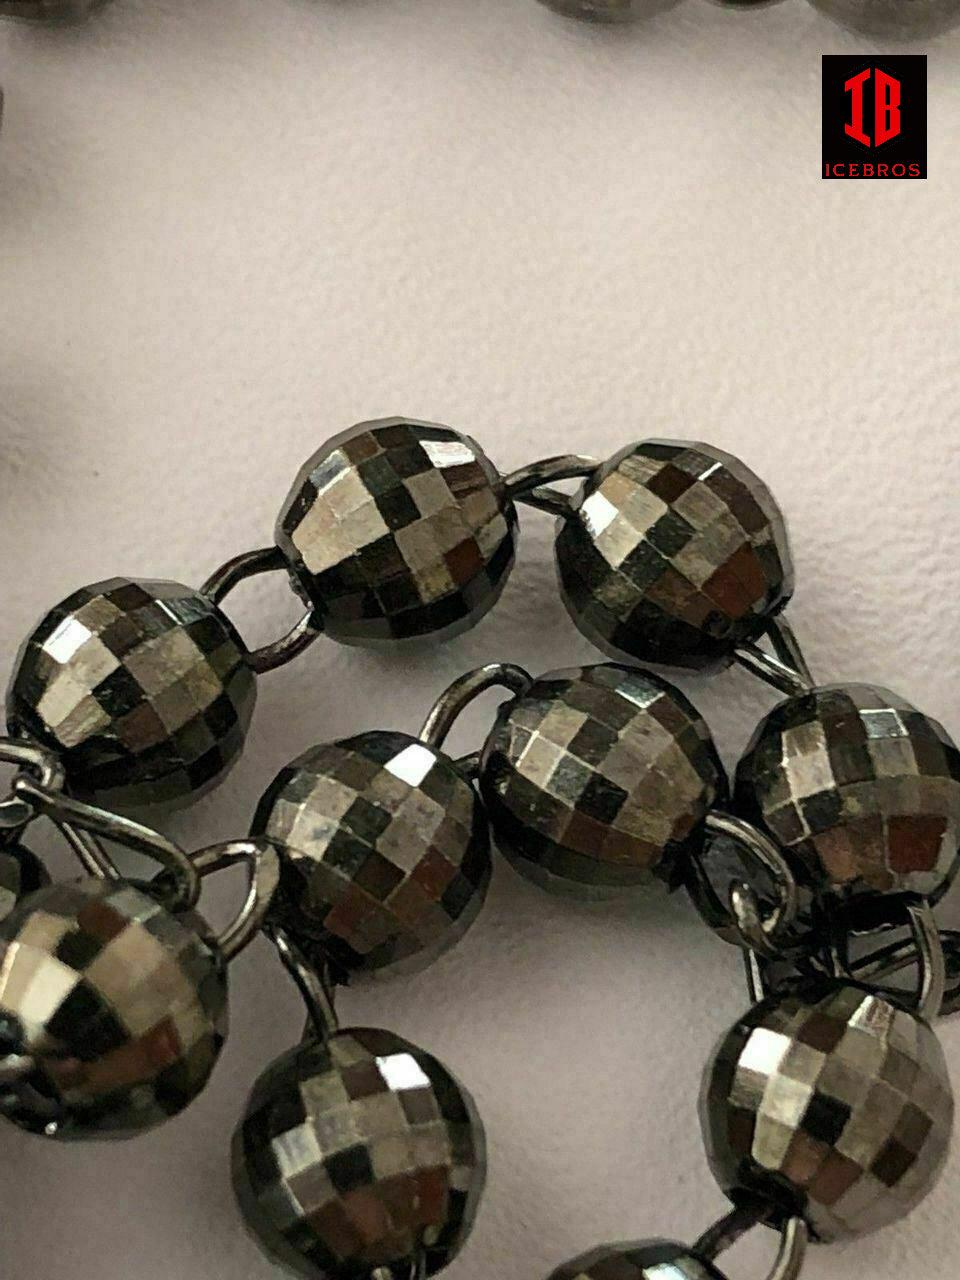 Men’s Rosary Beads Necklace Oxidized Black Disco Ball Cut 925 Silver Rosario ITALY Cross